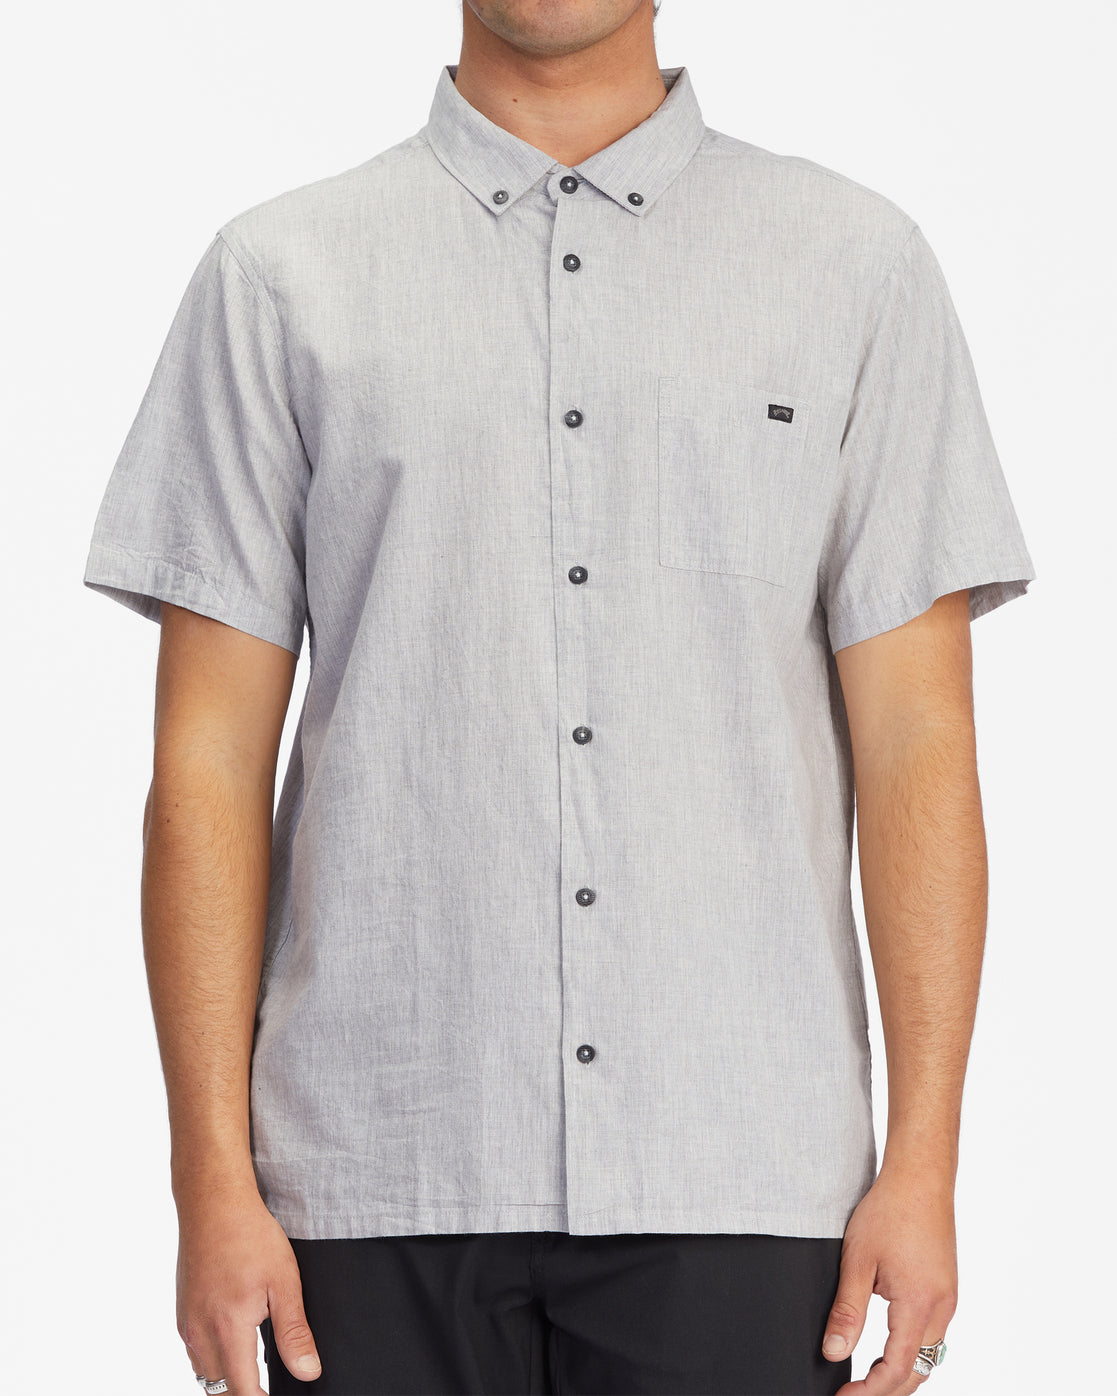 All Day Organic Short Sleeve Shirt - ABYWT00173